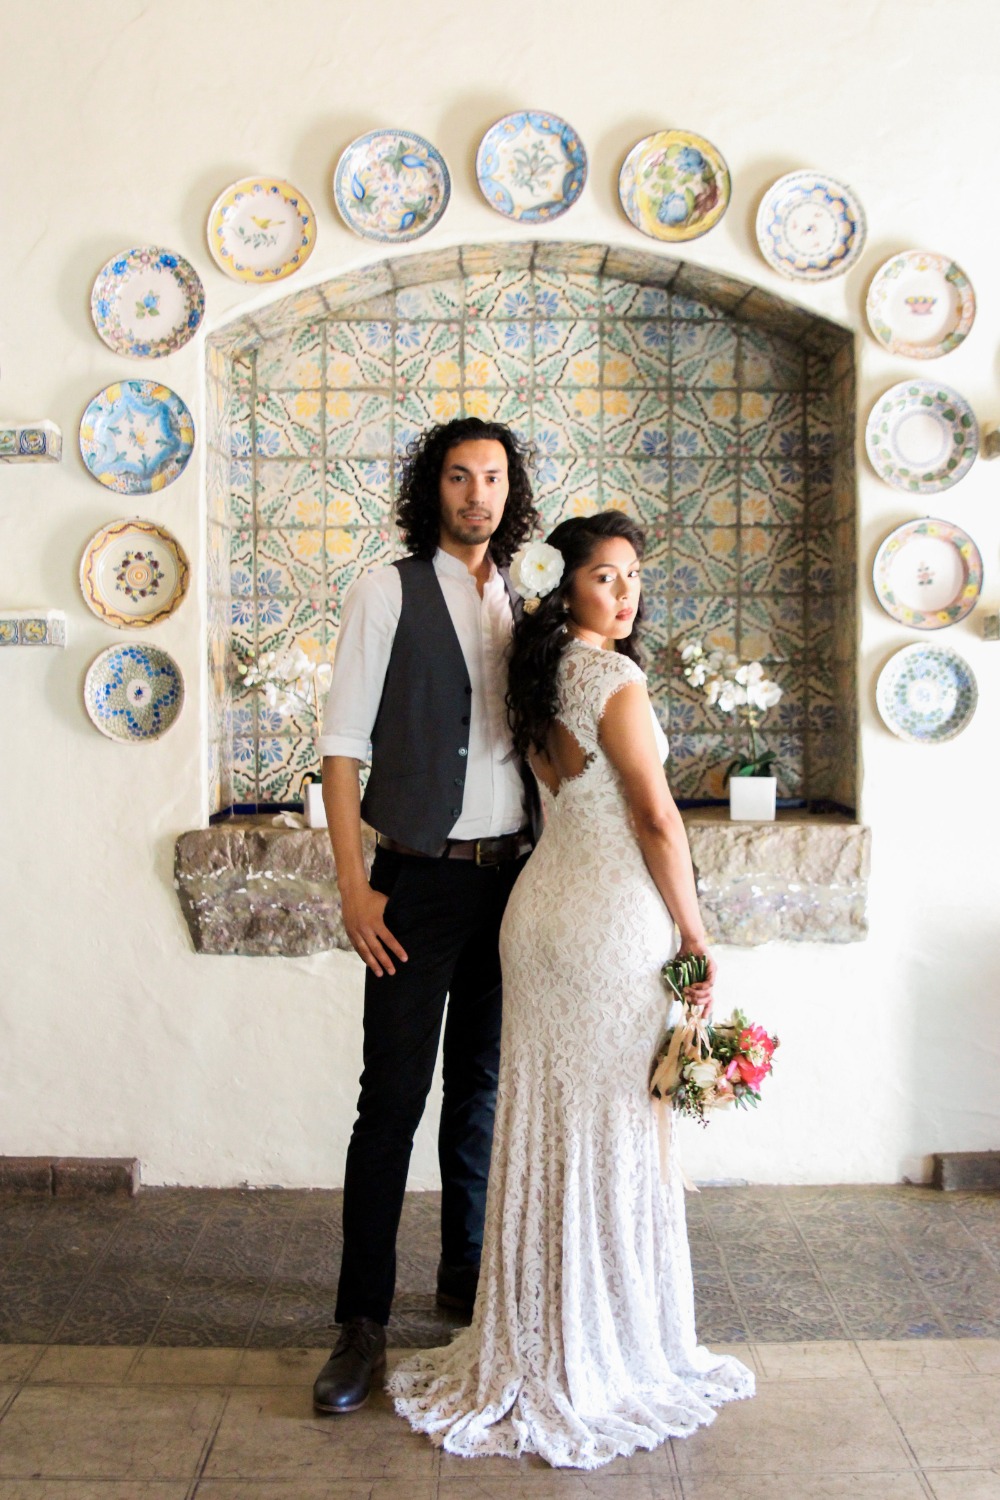 Beautiful old world Mexico wedding inspiration